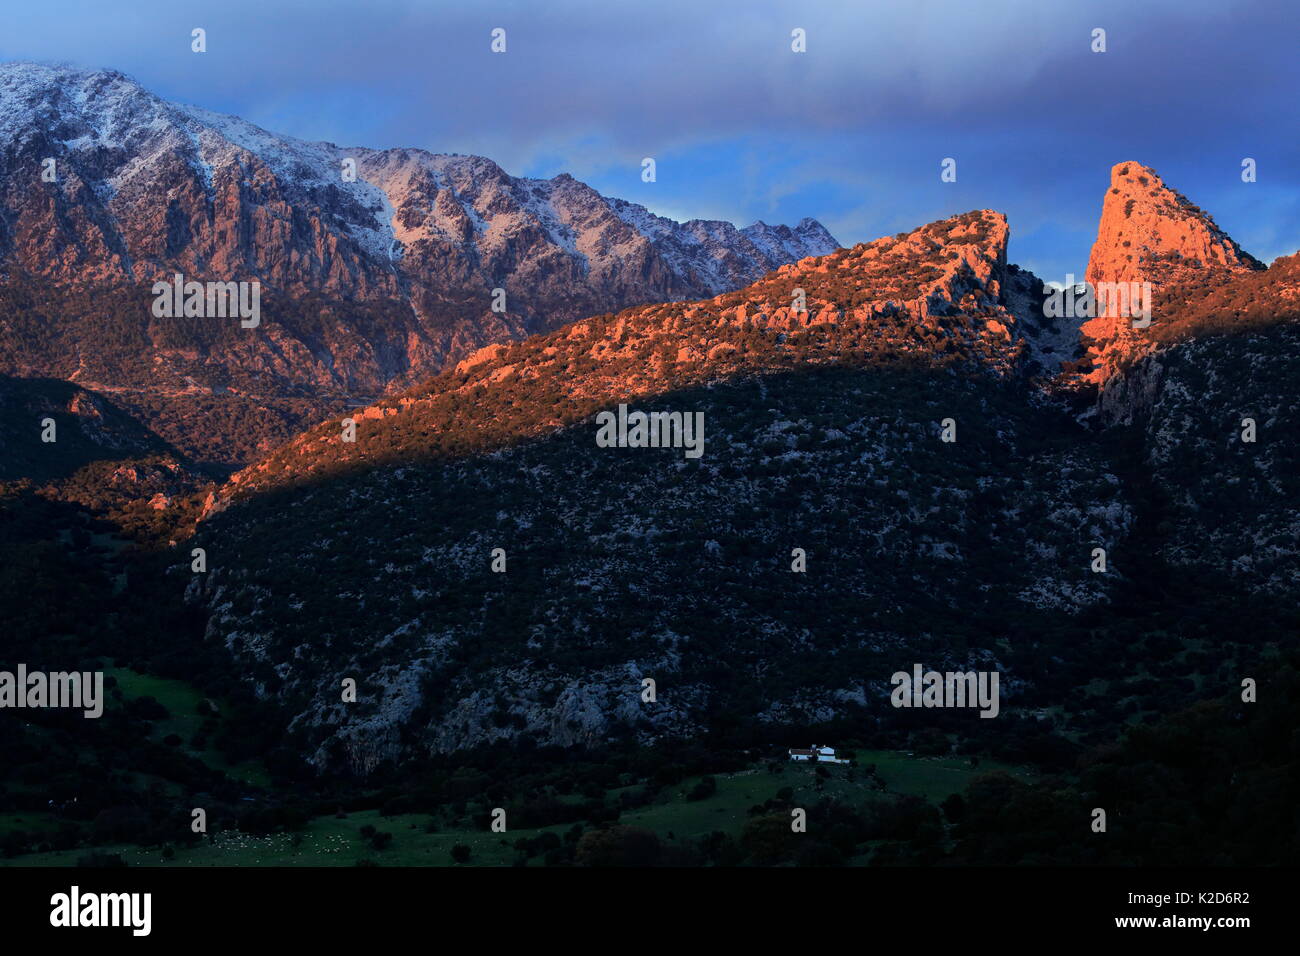 Paesaggio di montagna in Sierra de Grazalema parco naturale, Benaocaz, Spagna meridionale, Gennaio 2015. Foto Stock